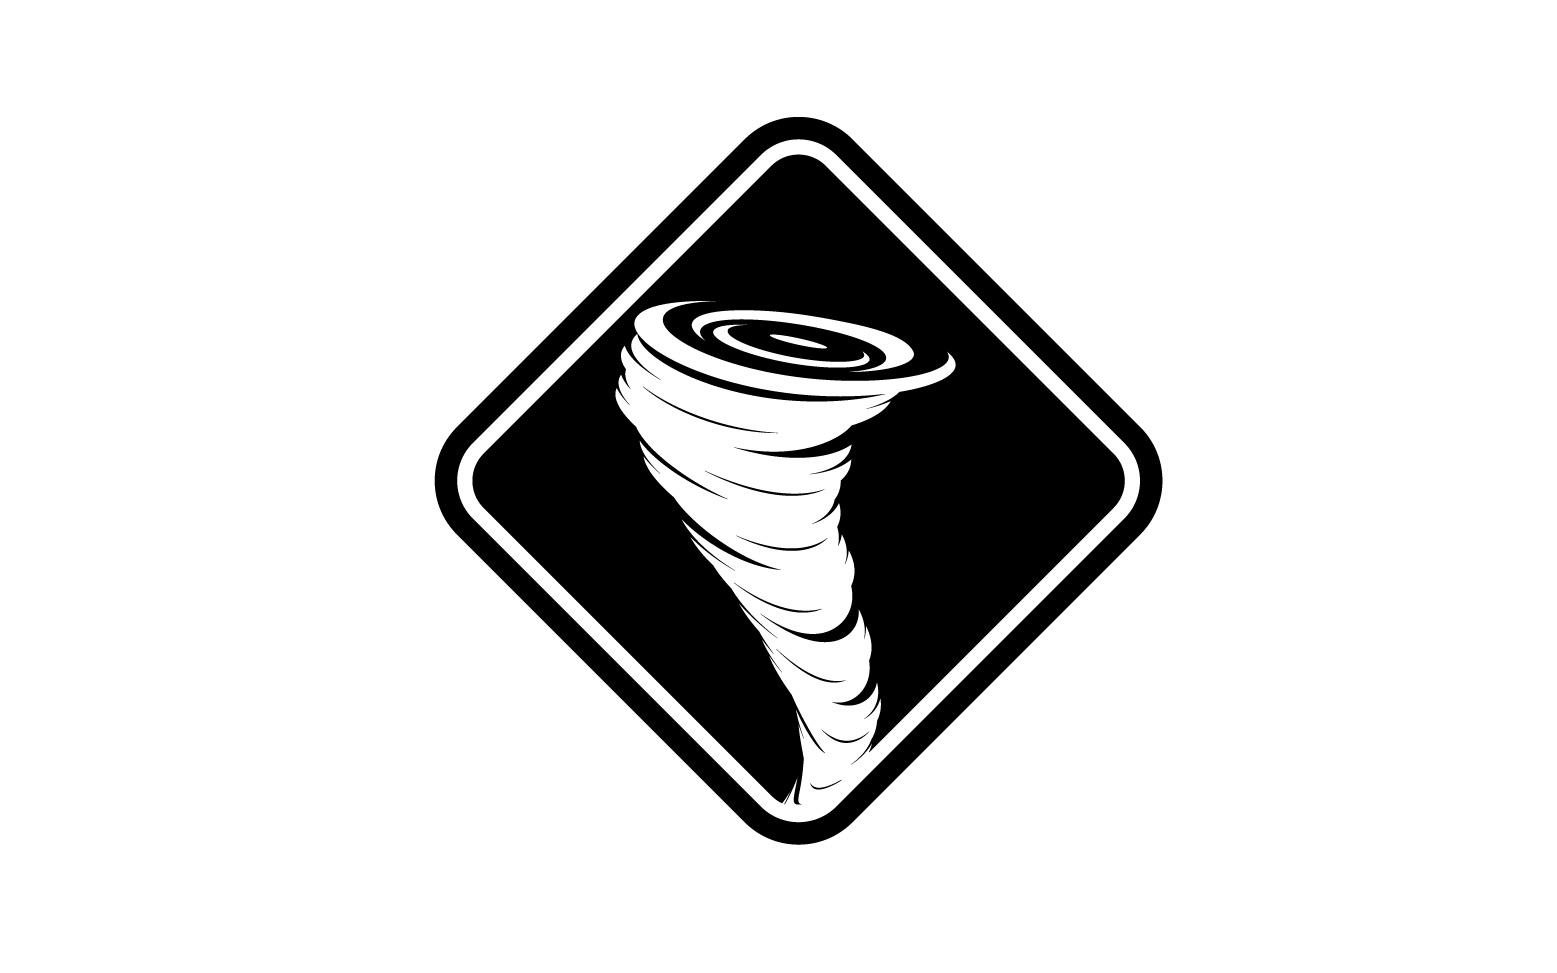 Tornado vortex icon logo vector v40